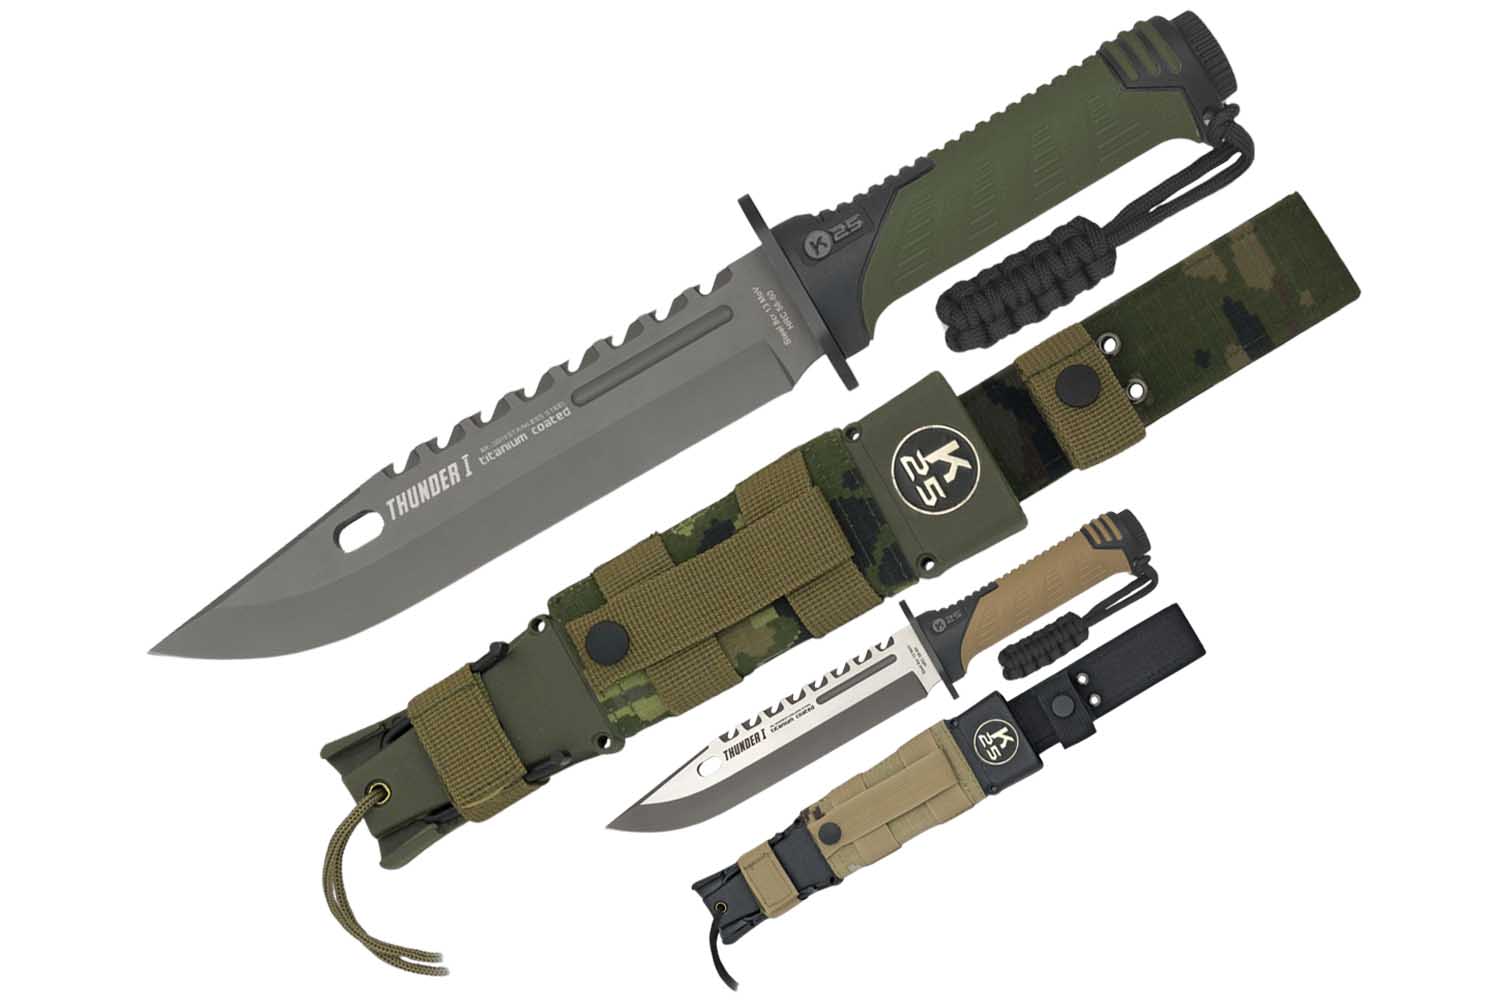 Hunting knife, with survival kit - Thunder I, K25